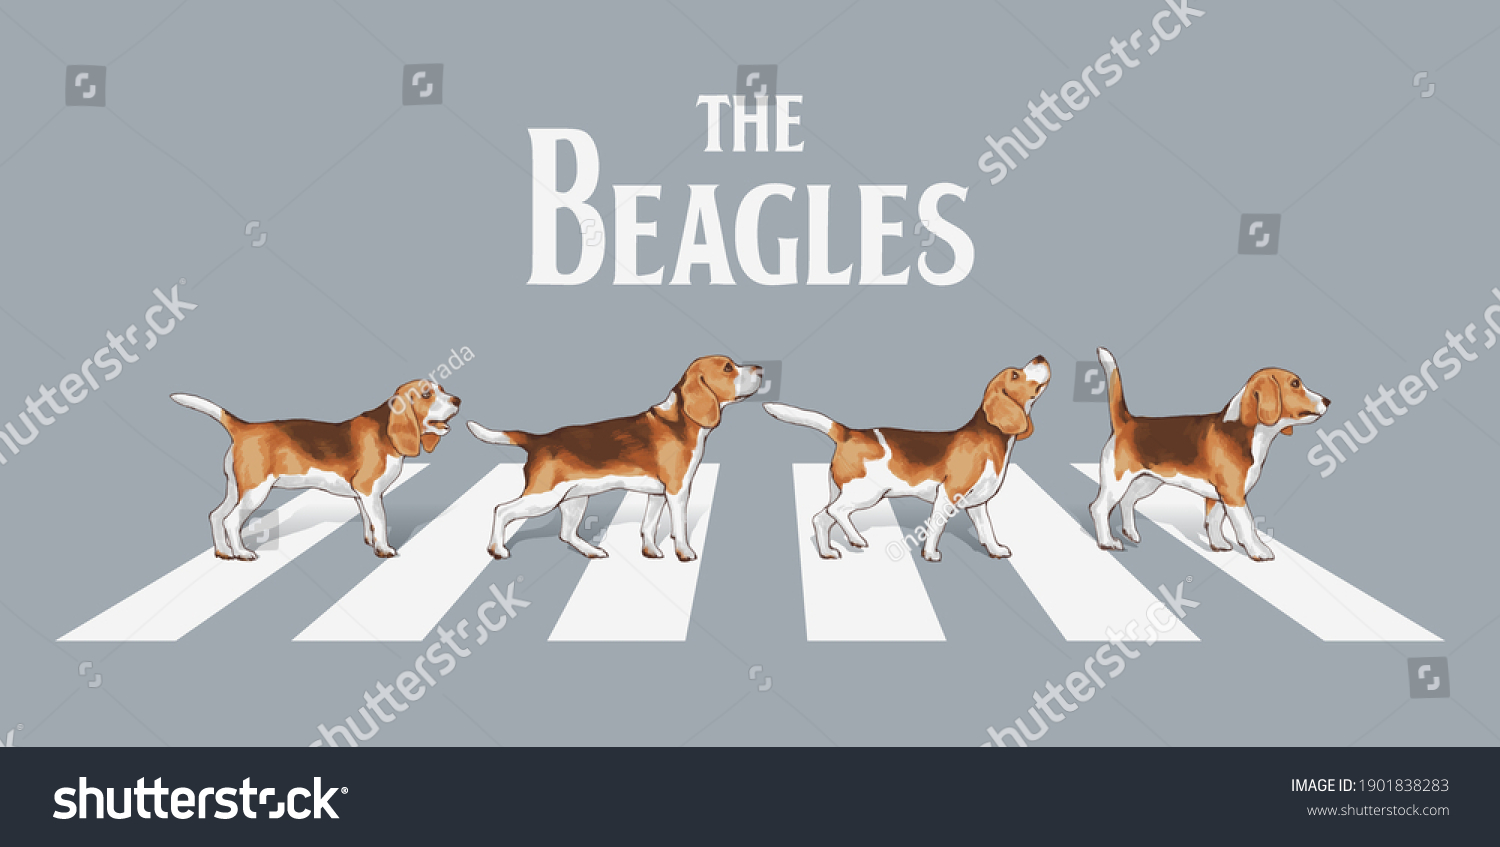 Eat Sleep Walk Beagle Repeat  T-Shirt  Hoodie  Dog Walker Shirt  Beagle Gift  Funny Beagle Shirt  Funny Dog Shirt